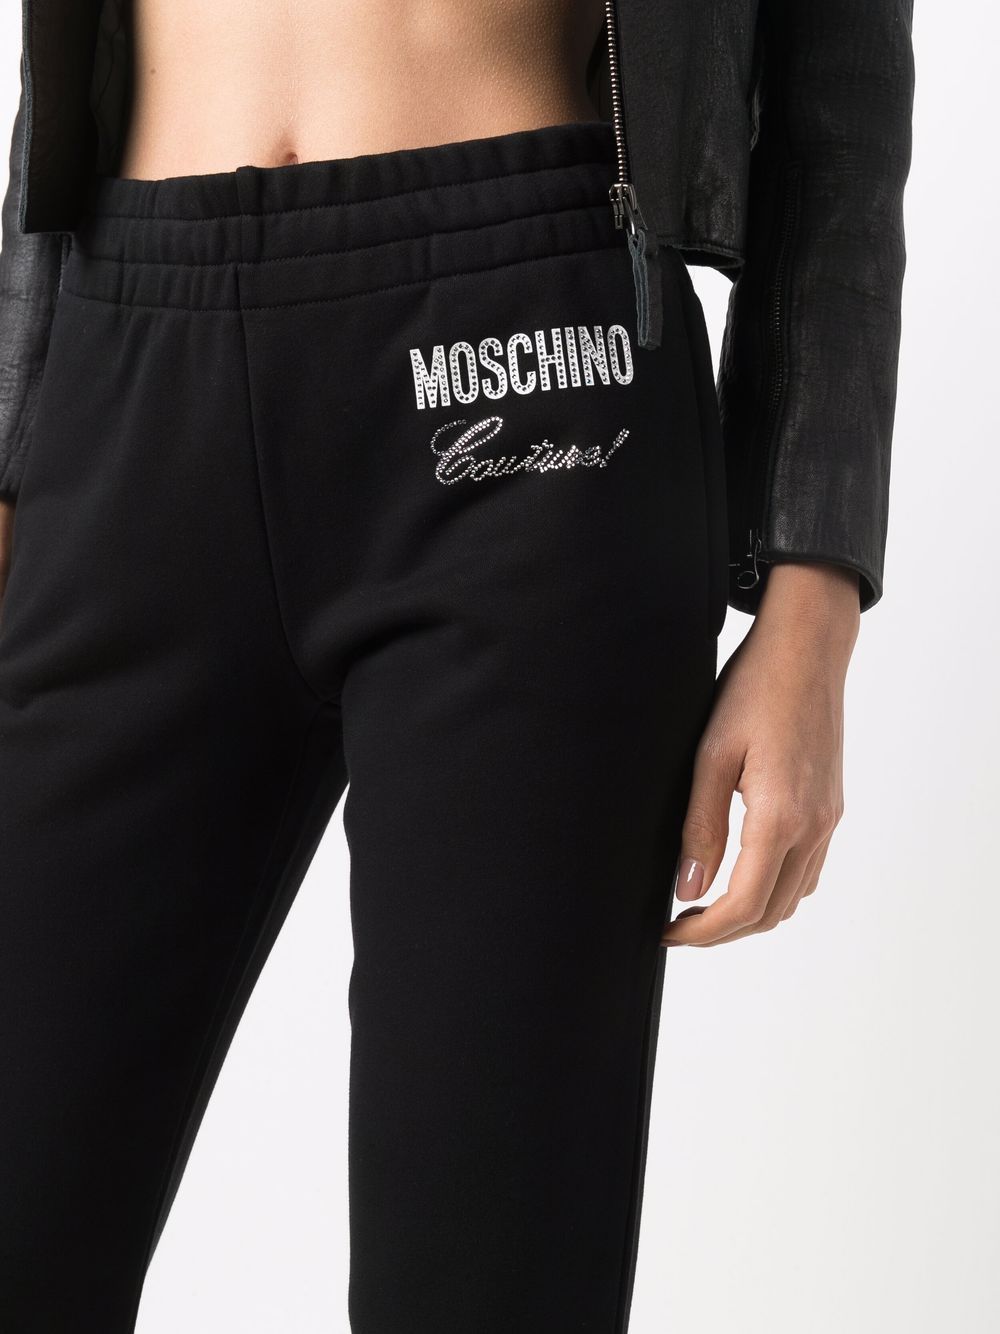 фото Moschino спортивные брюки с логотипом